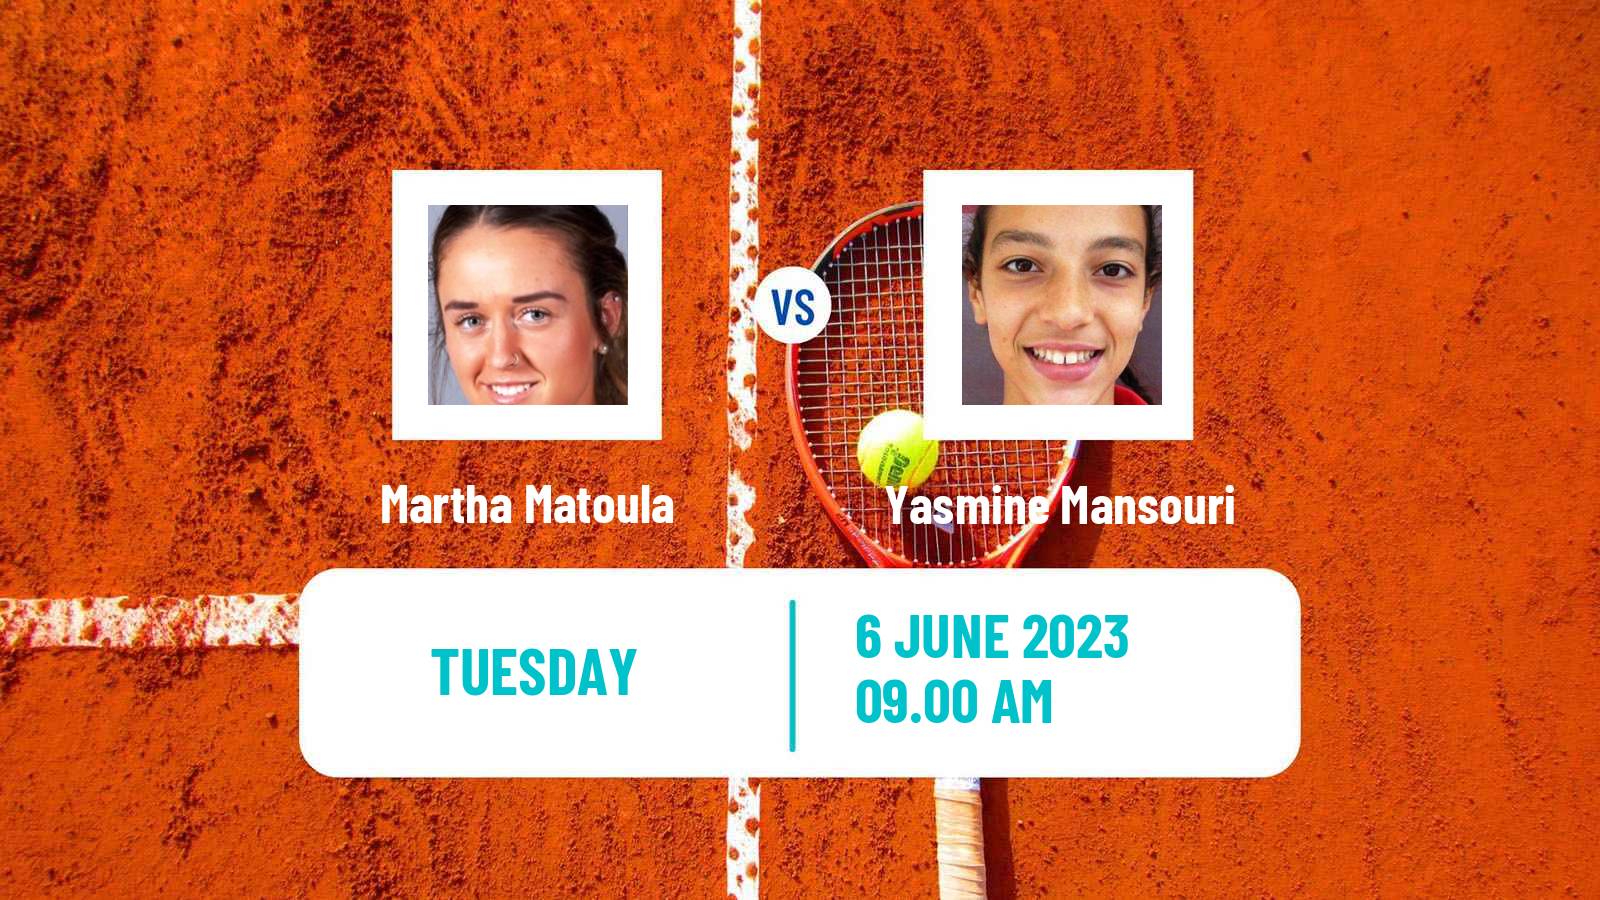 Tennis ITF W40 La Marsa Women Martha Matoula - Yasmine Mansouri